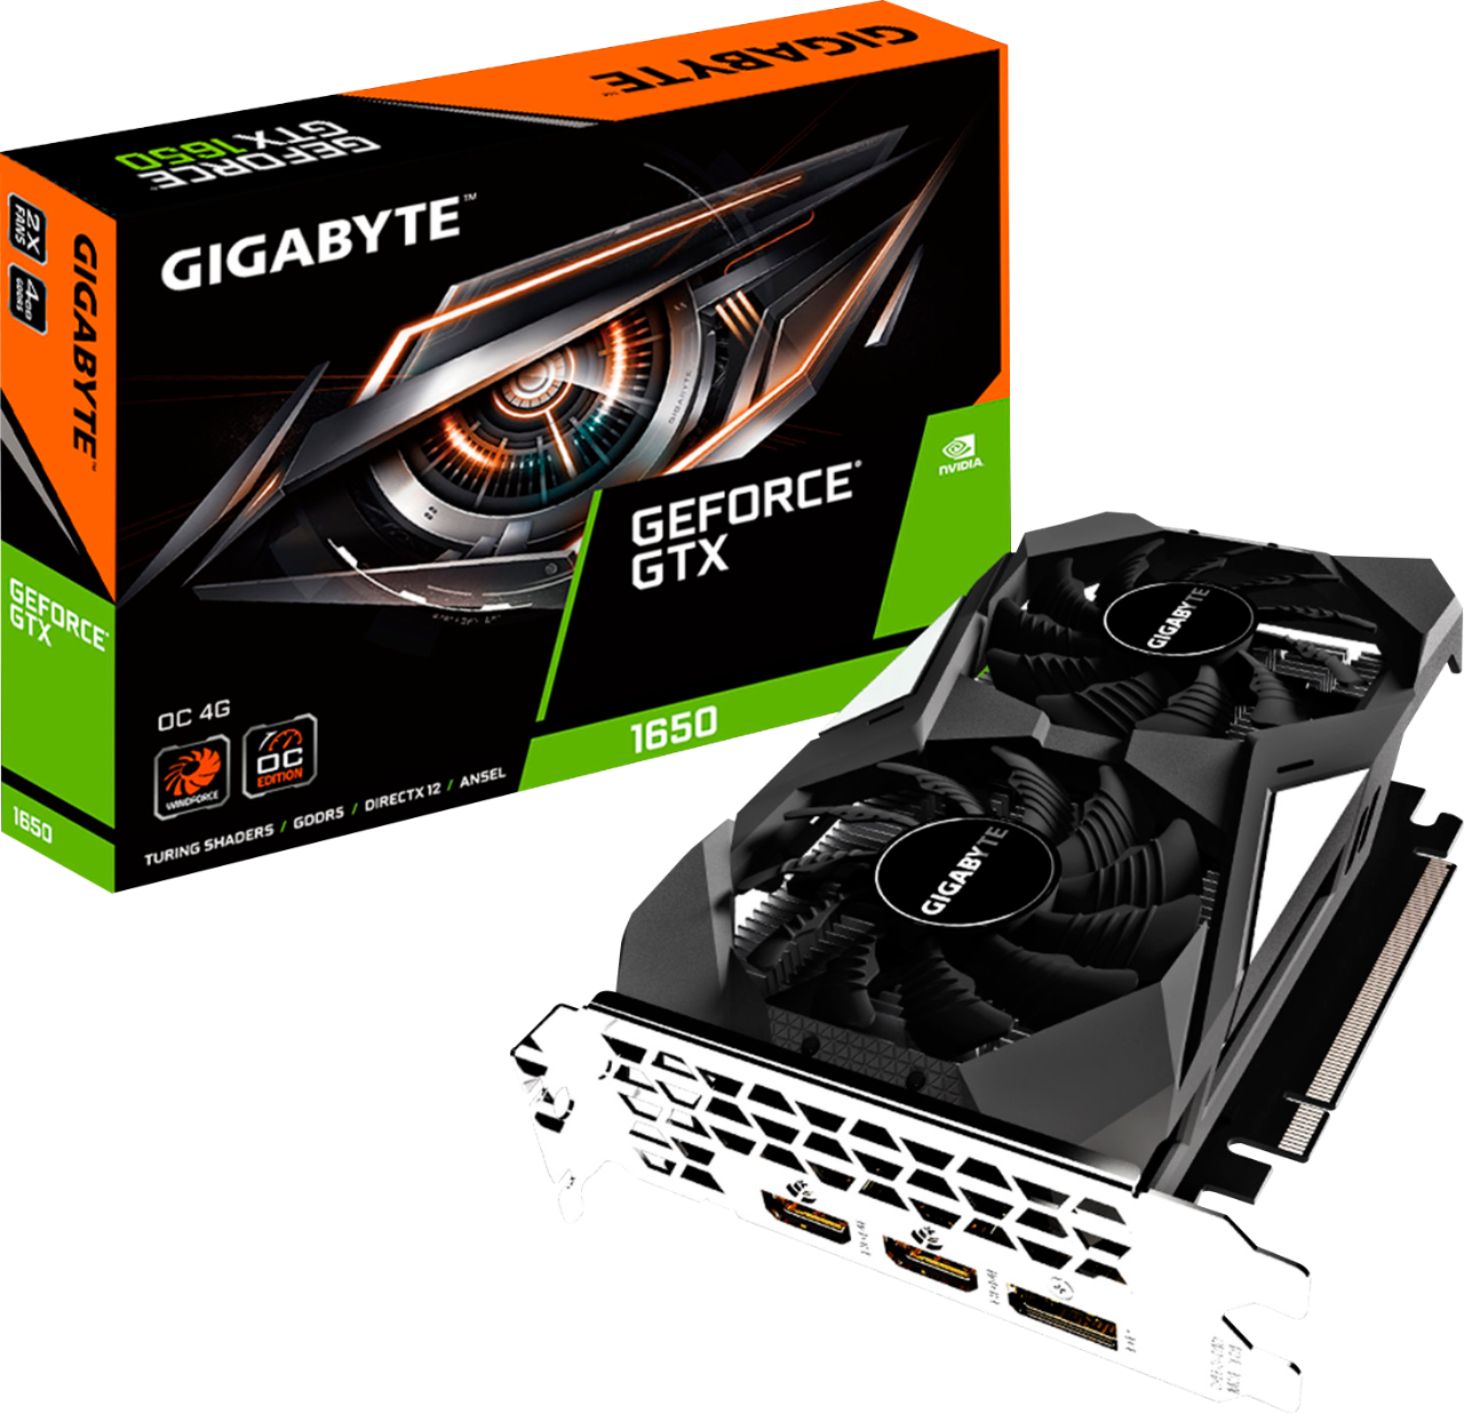 GIGABYTE NVIDIA GeForce GTX 1650 4GB GDDR5 PCI - Best Buy